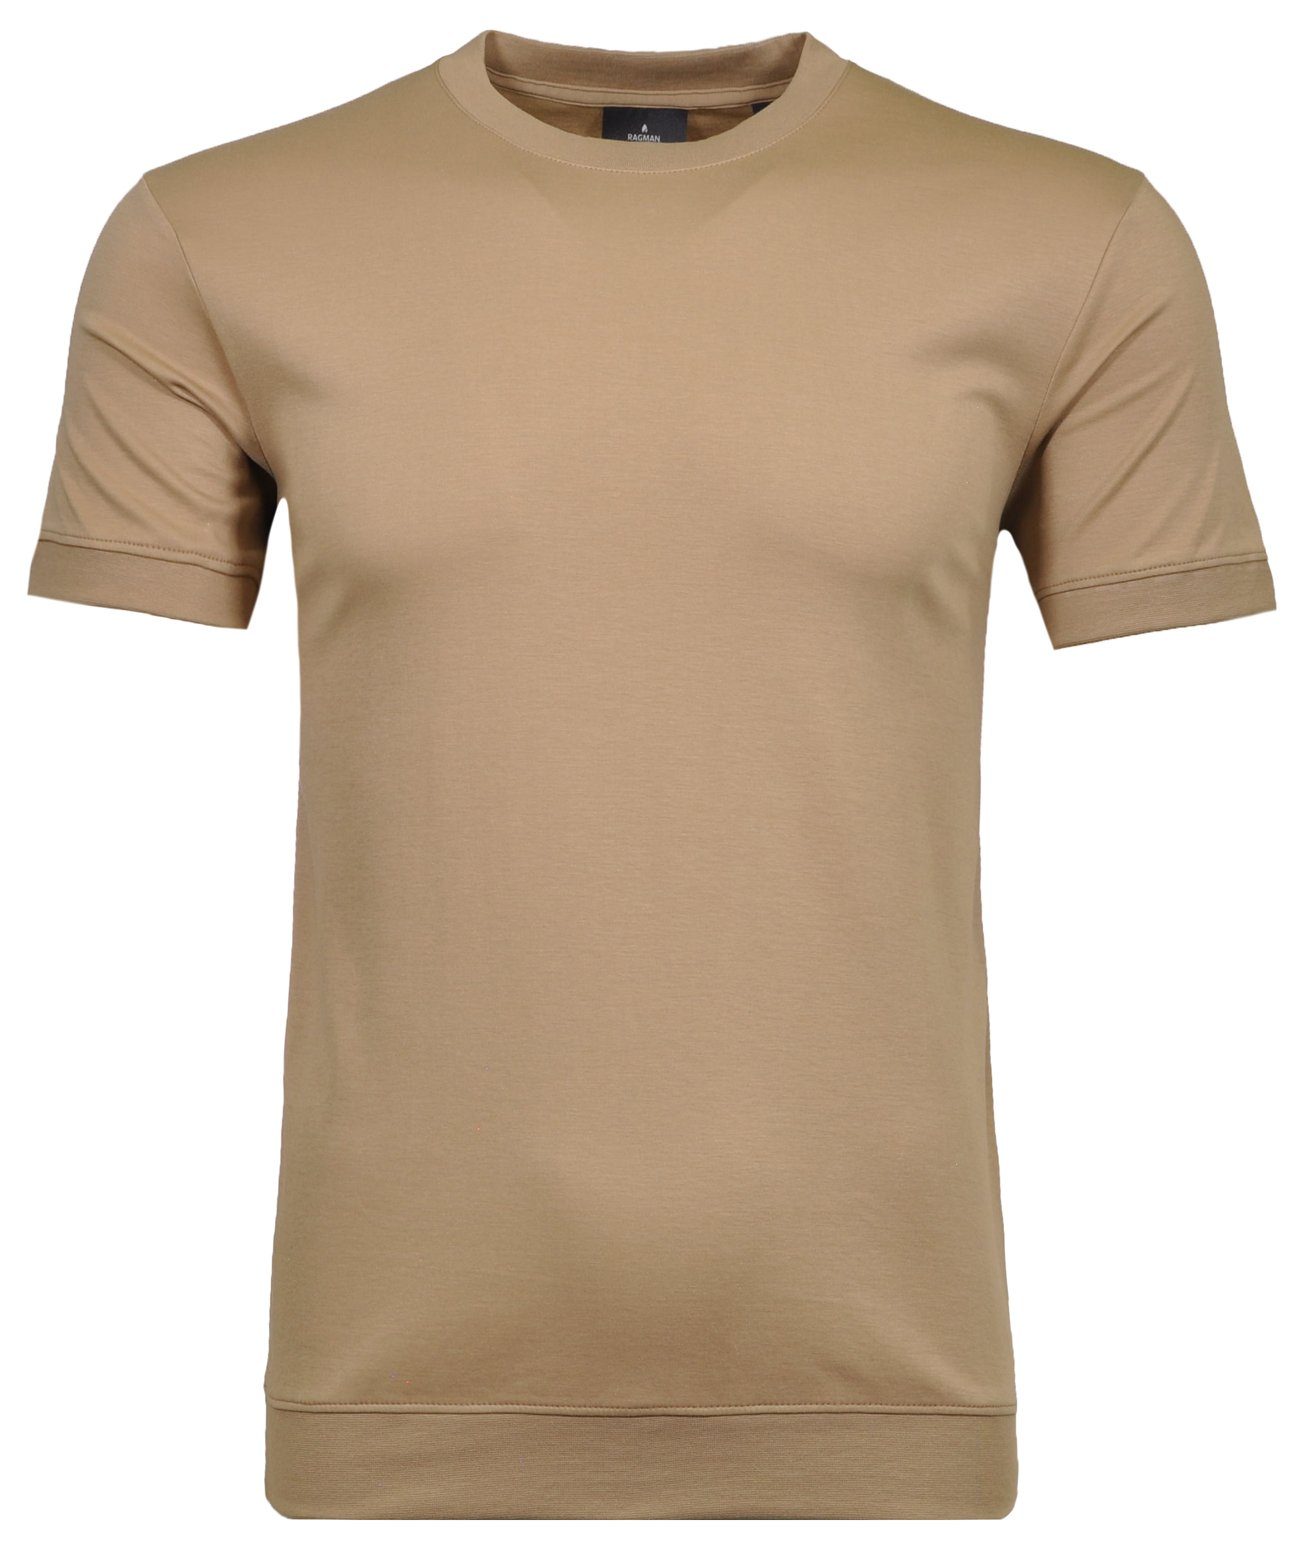 T-Shirt RAGMAN Kitt-881